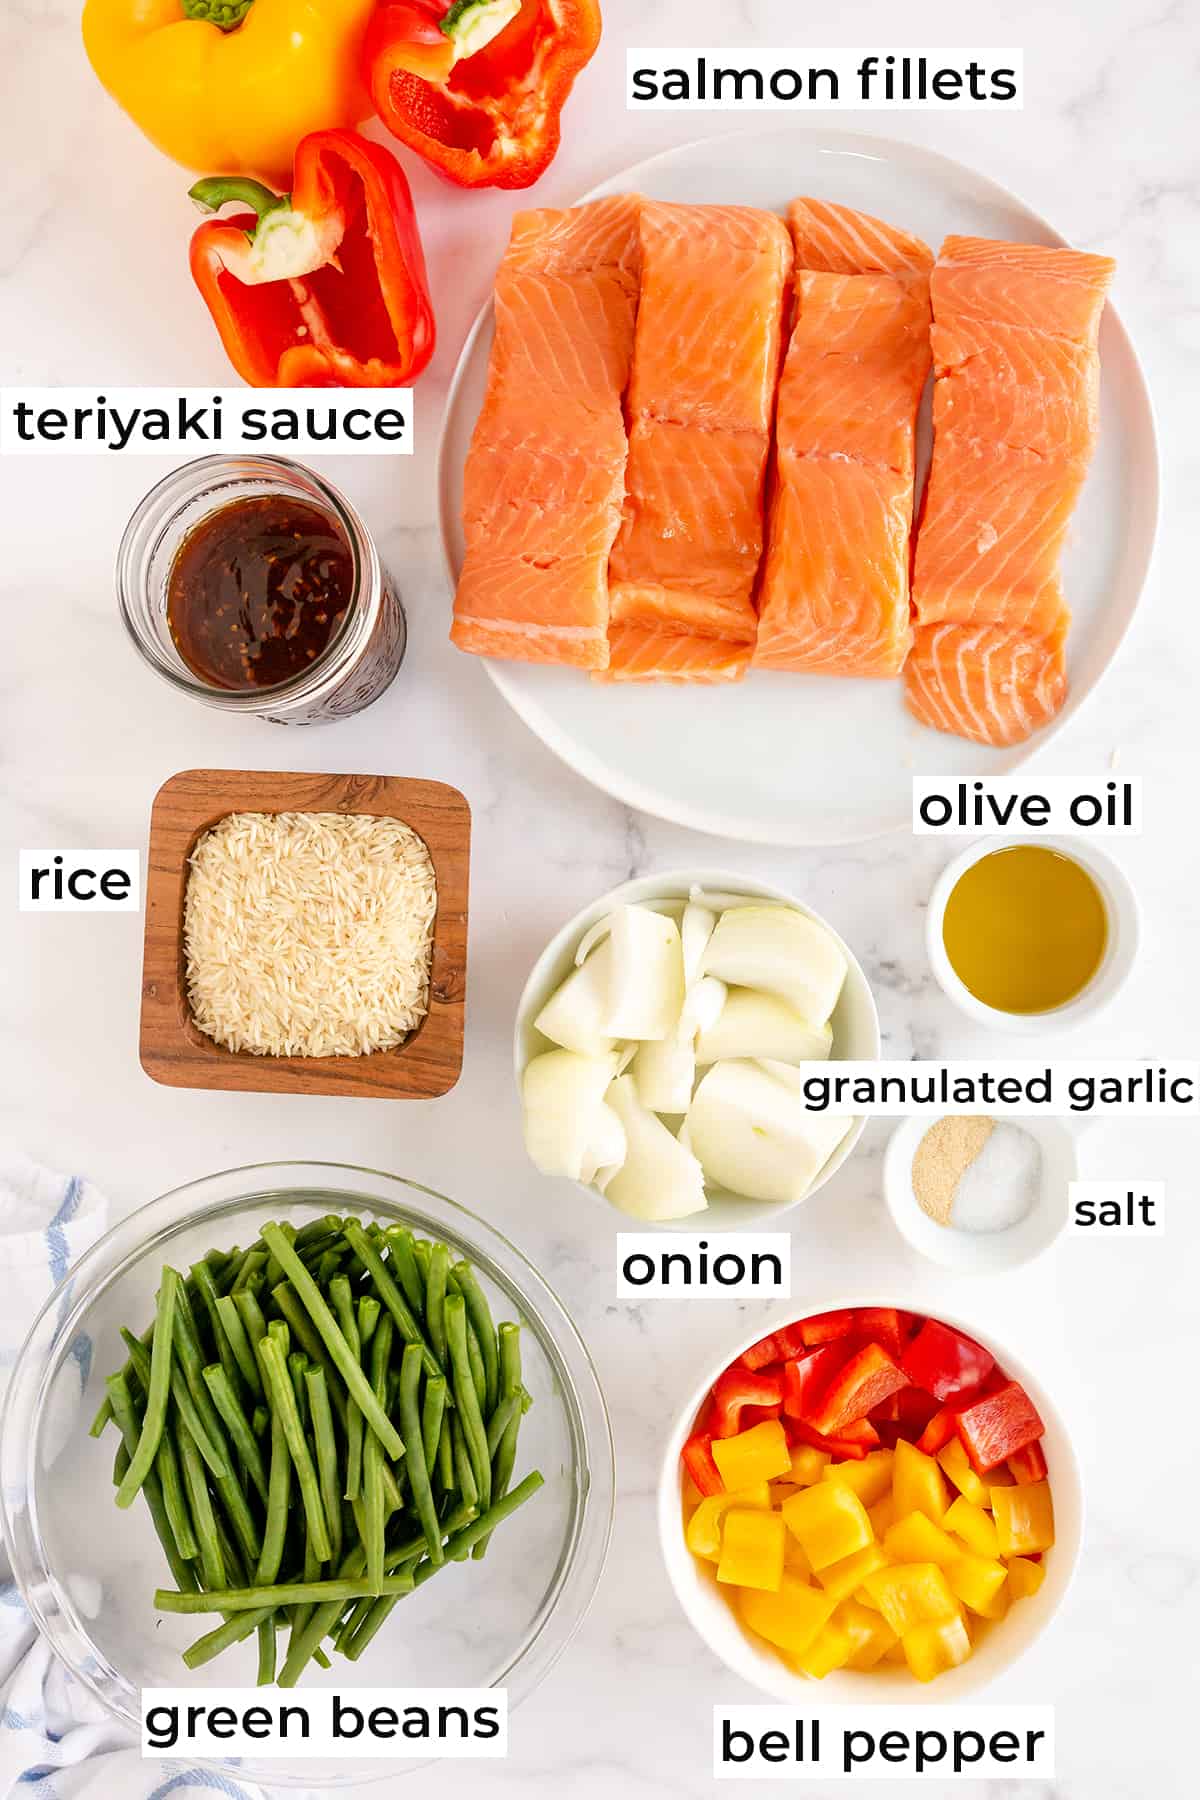 All the ingredients to make Teriyaki Salmon.